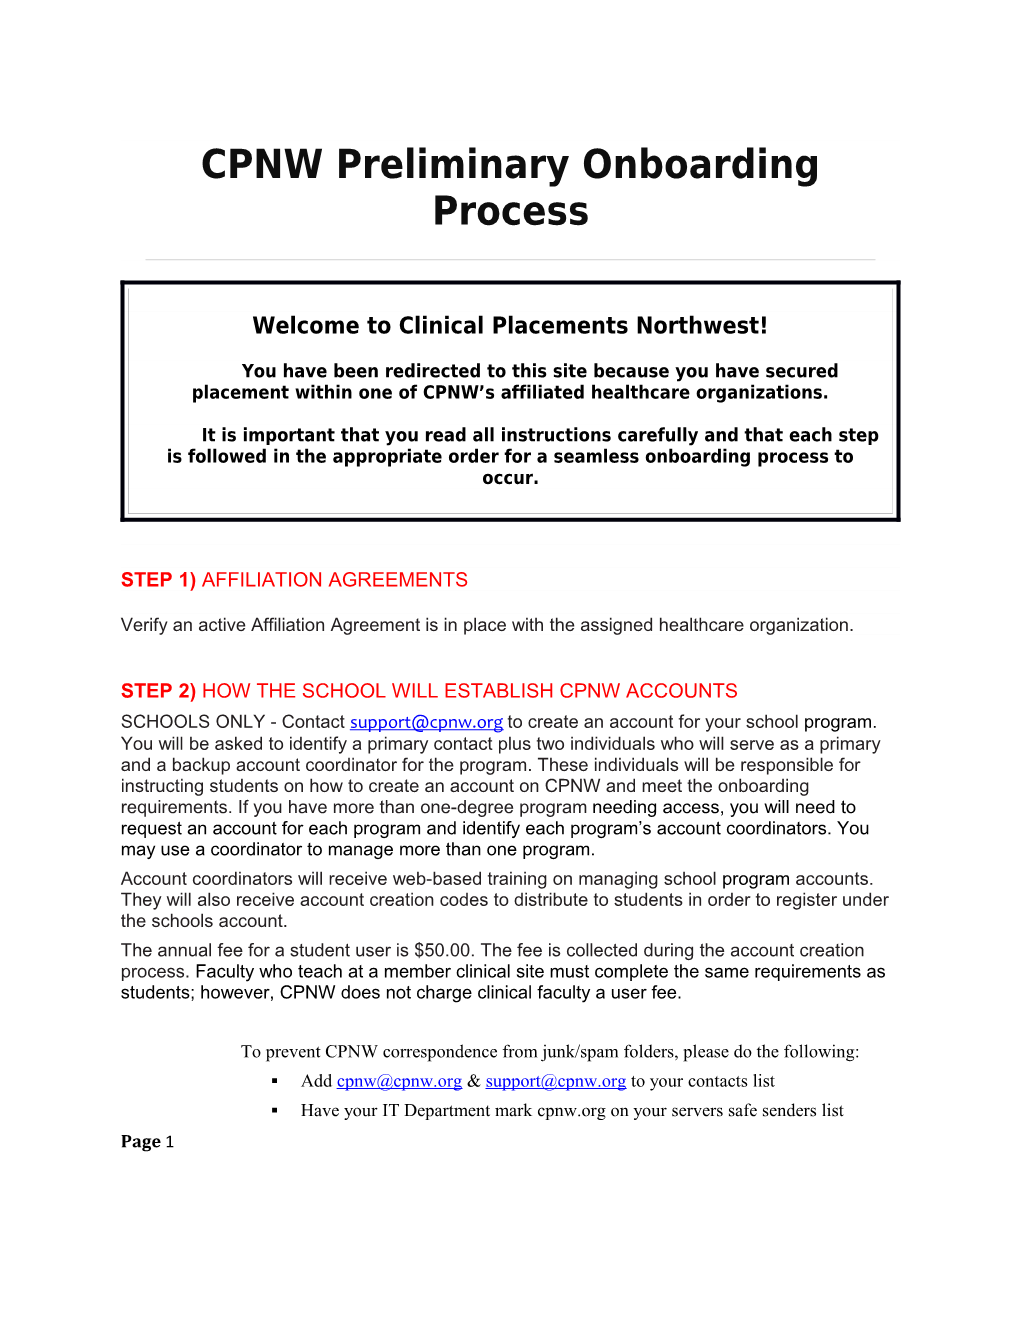 CPNW Preliminary Onboarding Process